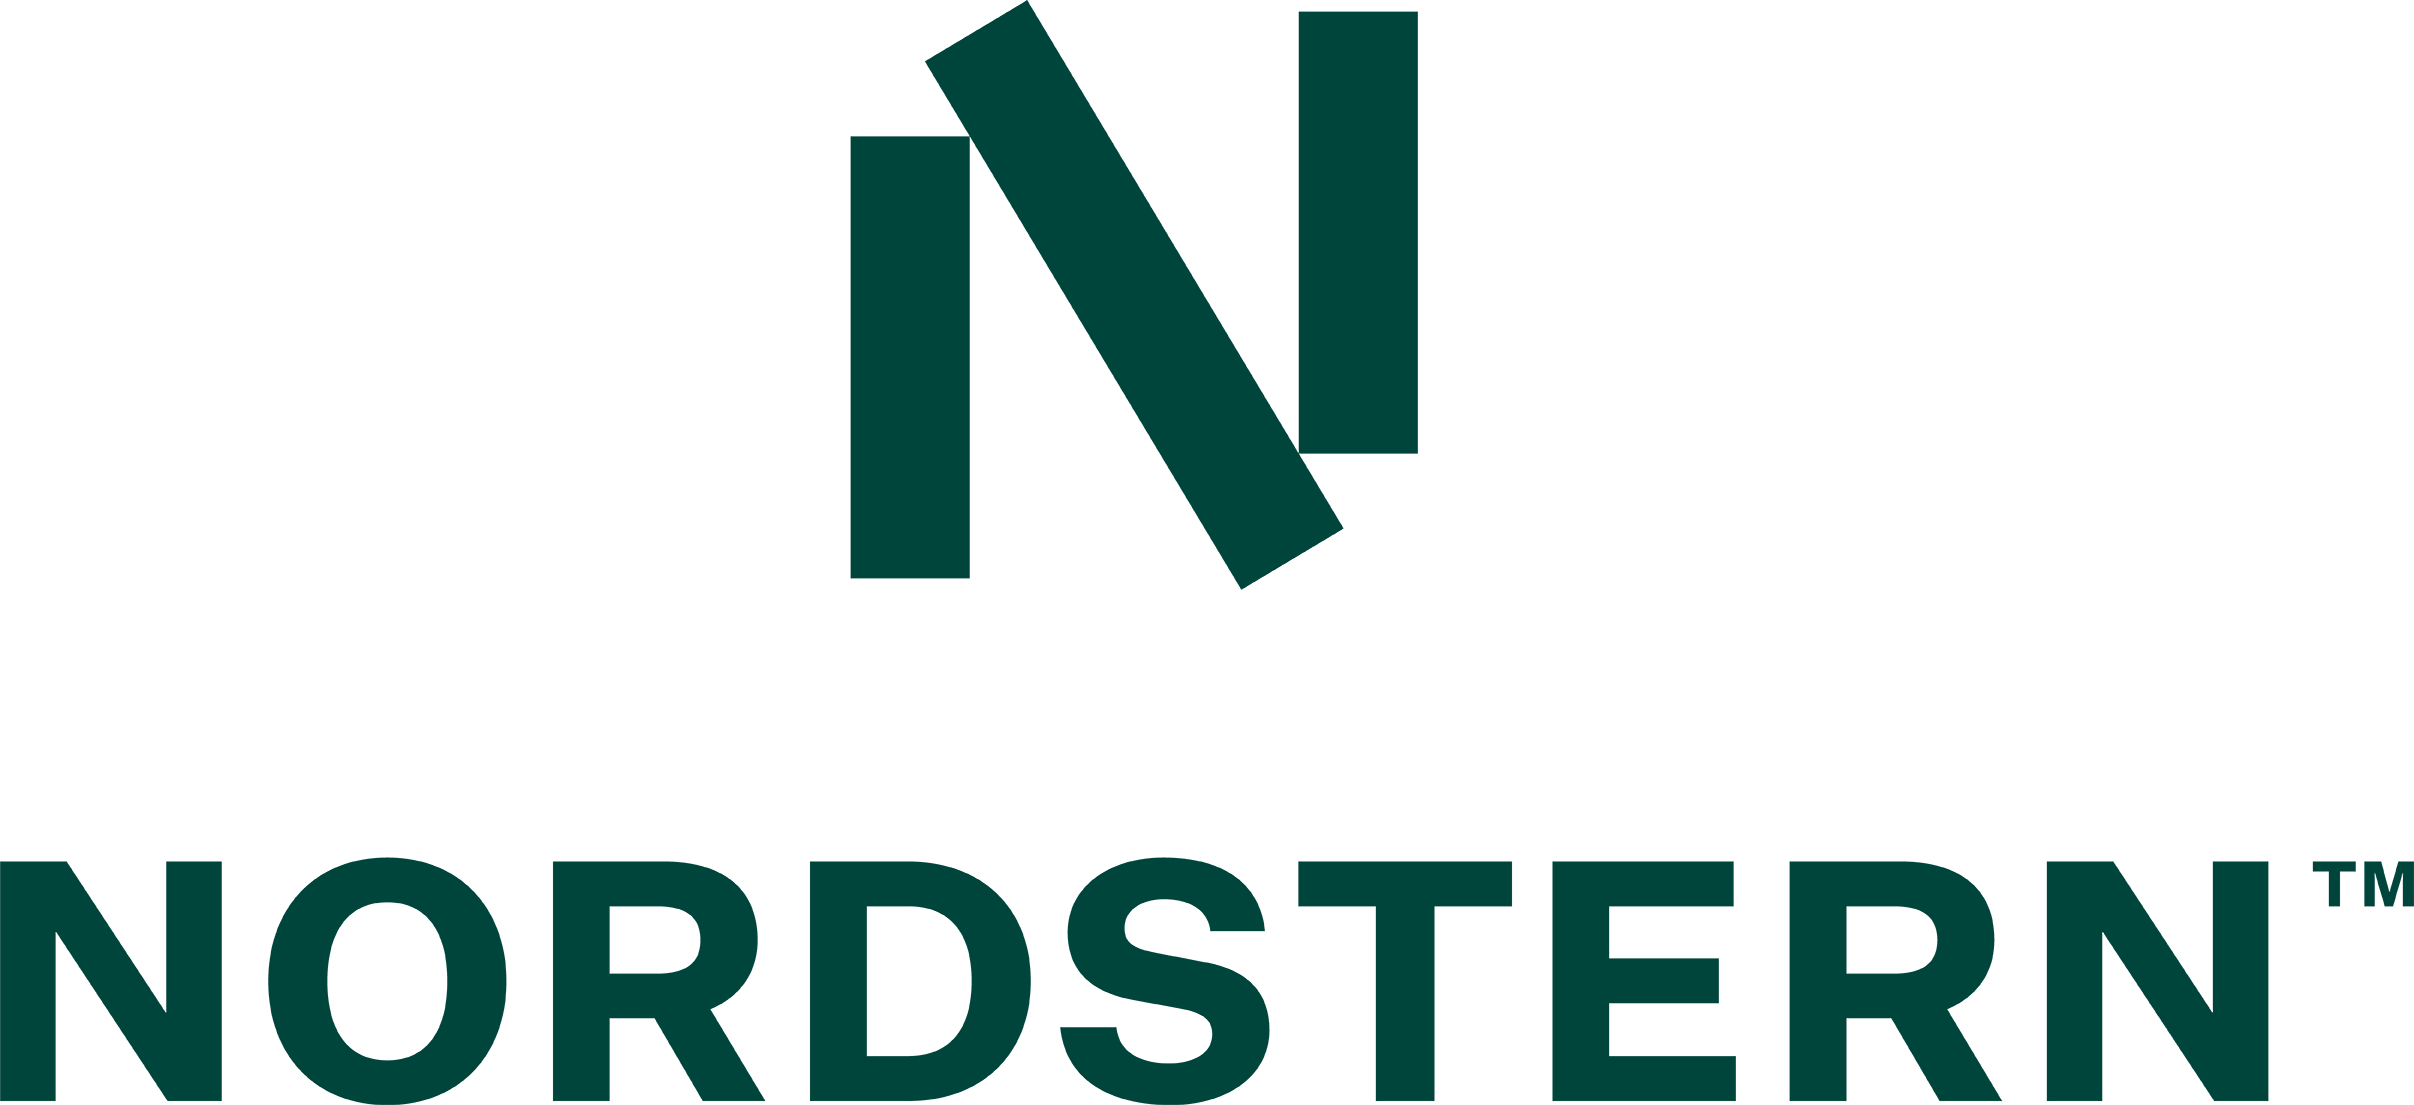 Nordstern_Lock-up_Vertikal_Green_RGB